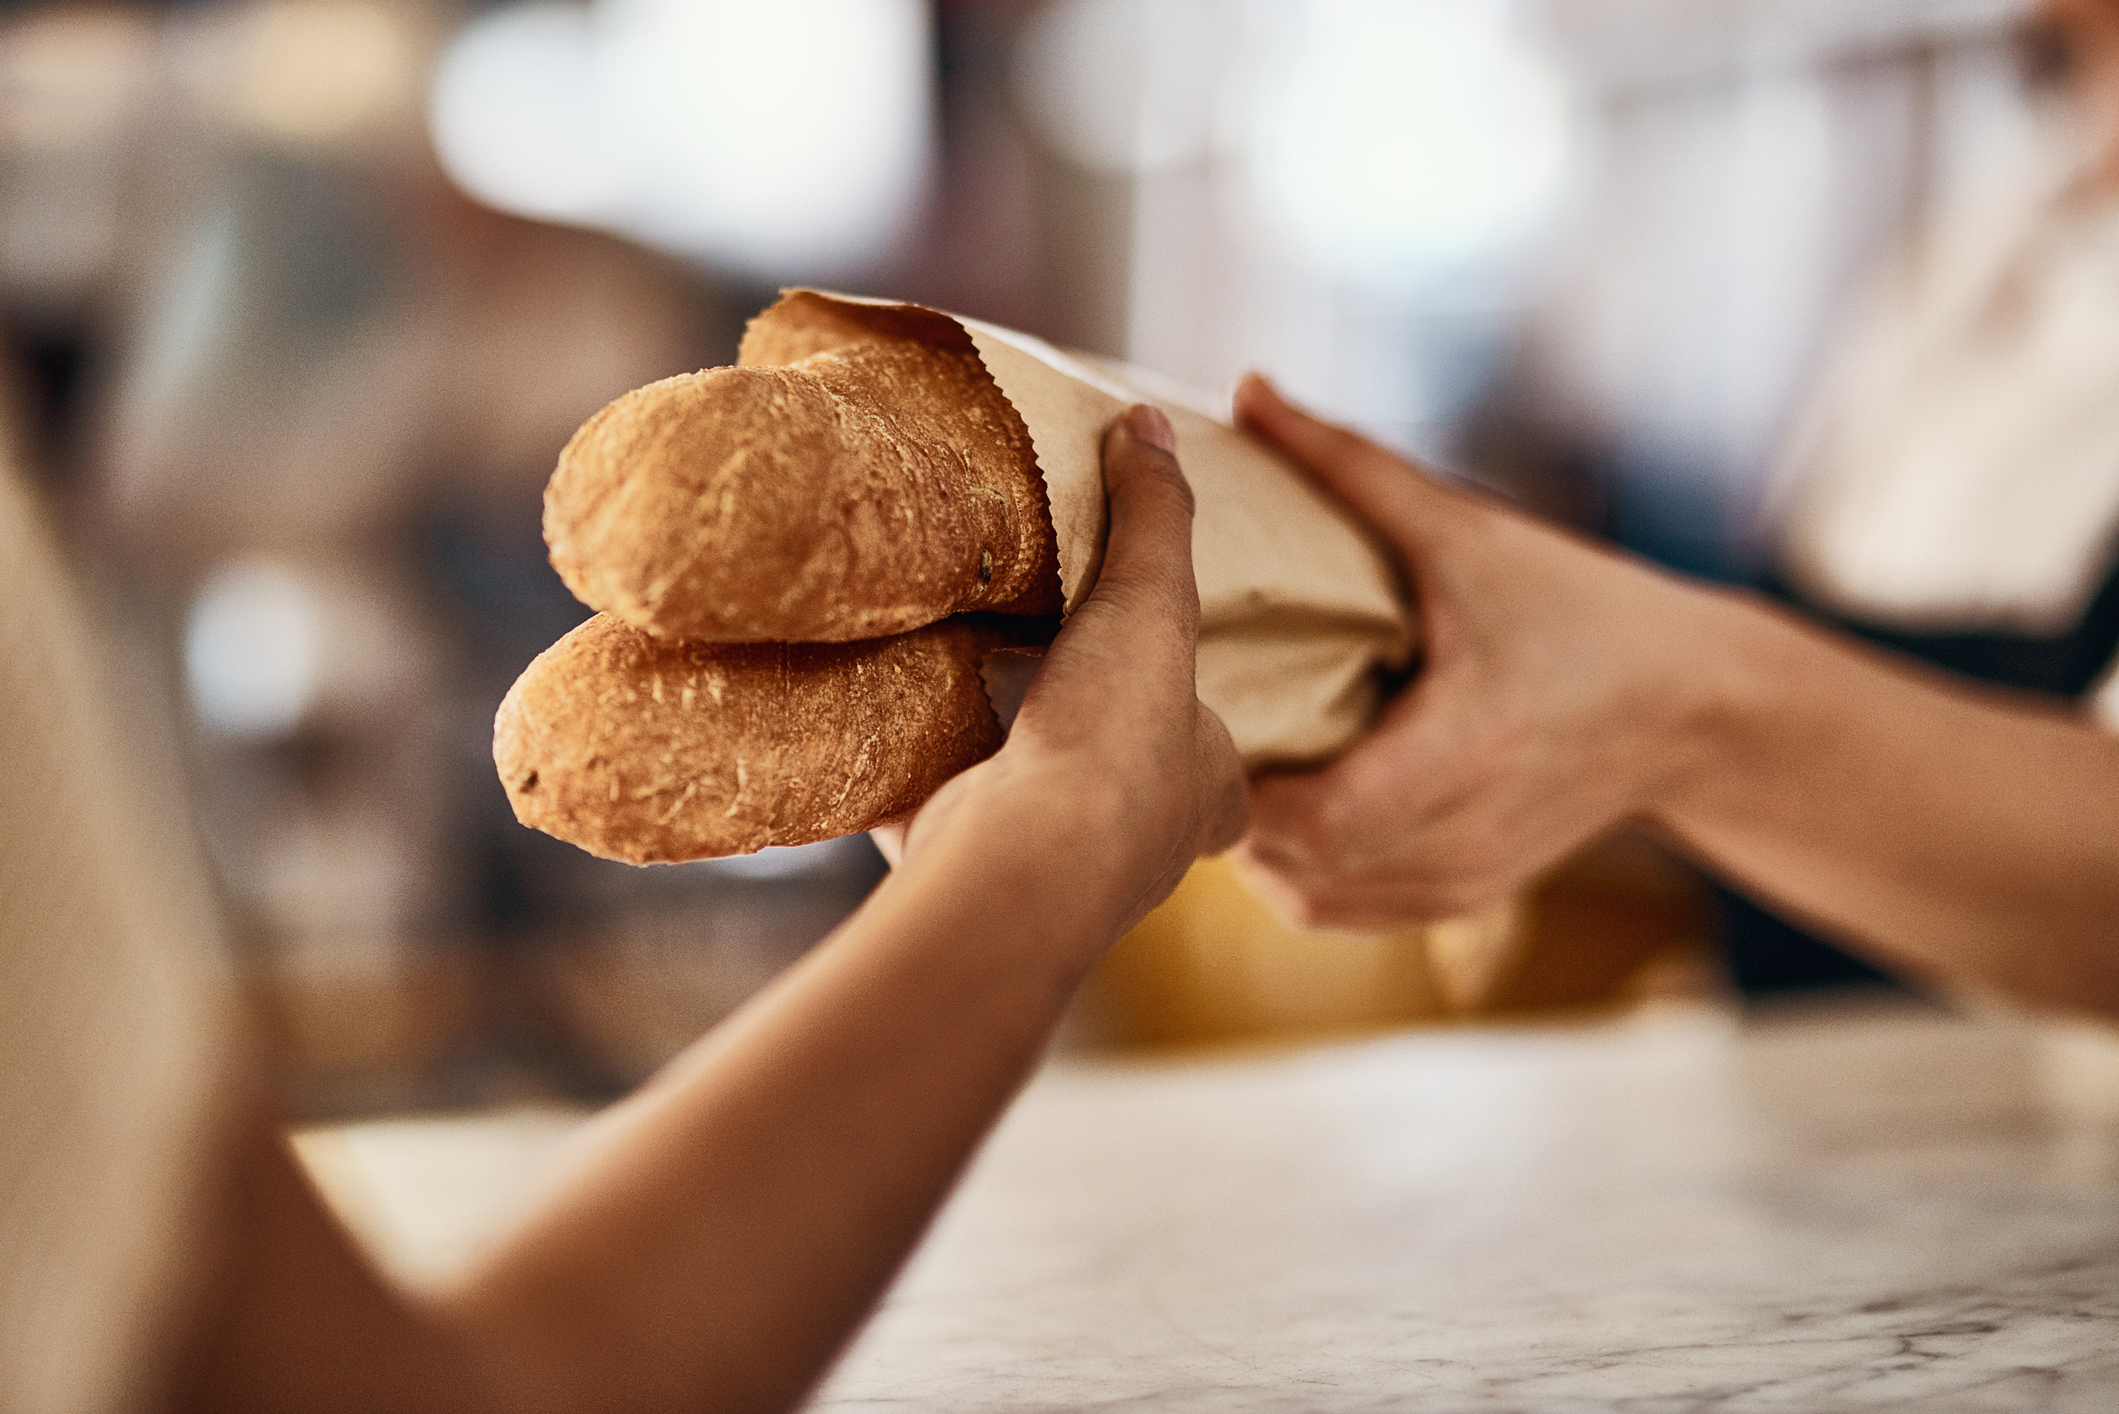 Freshly baked bread, one of life's simplest pleasures